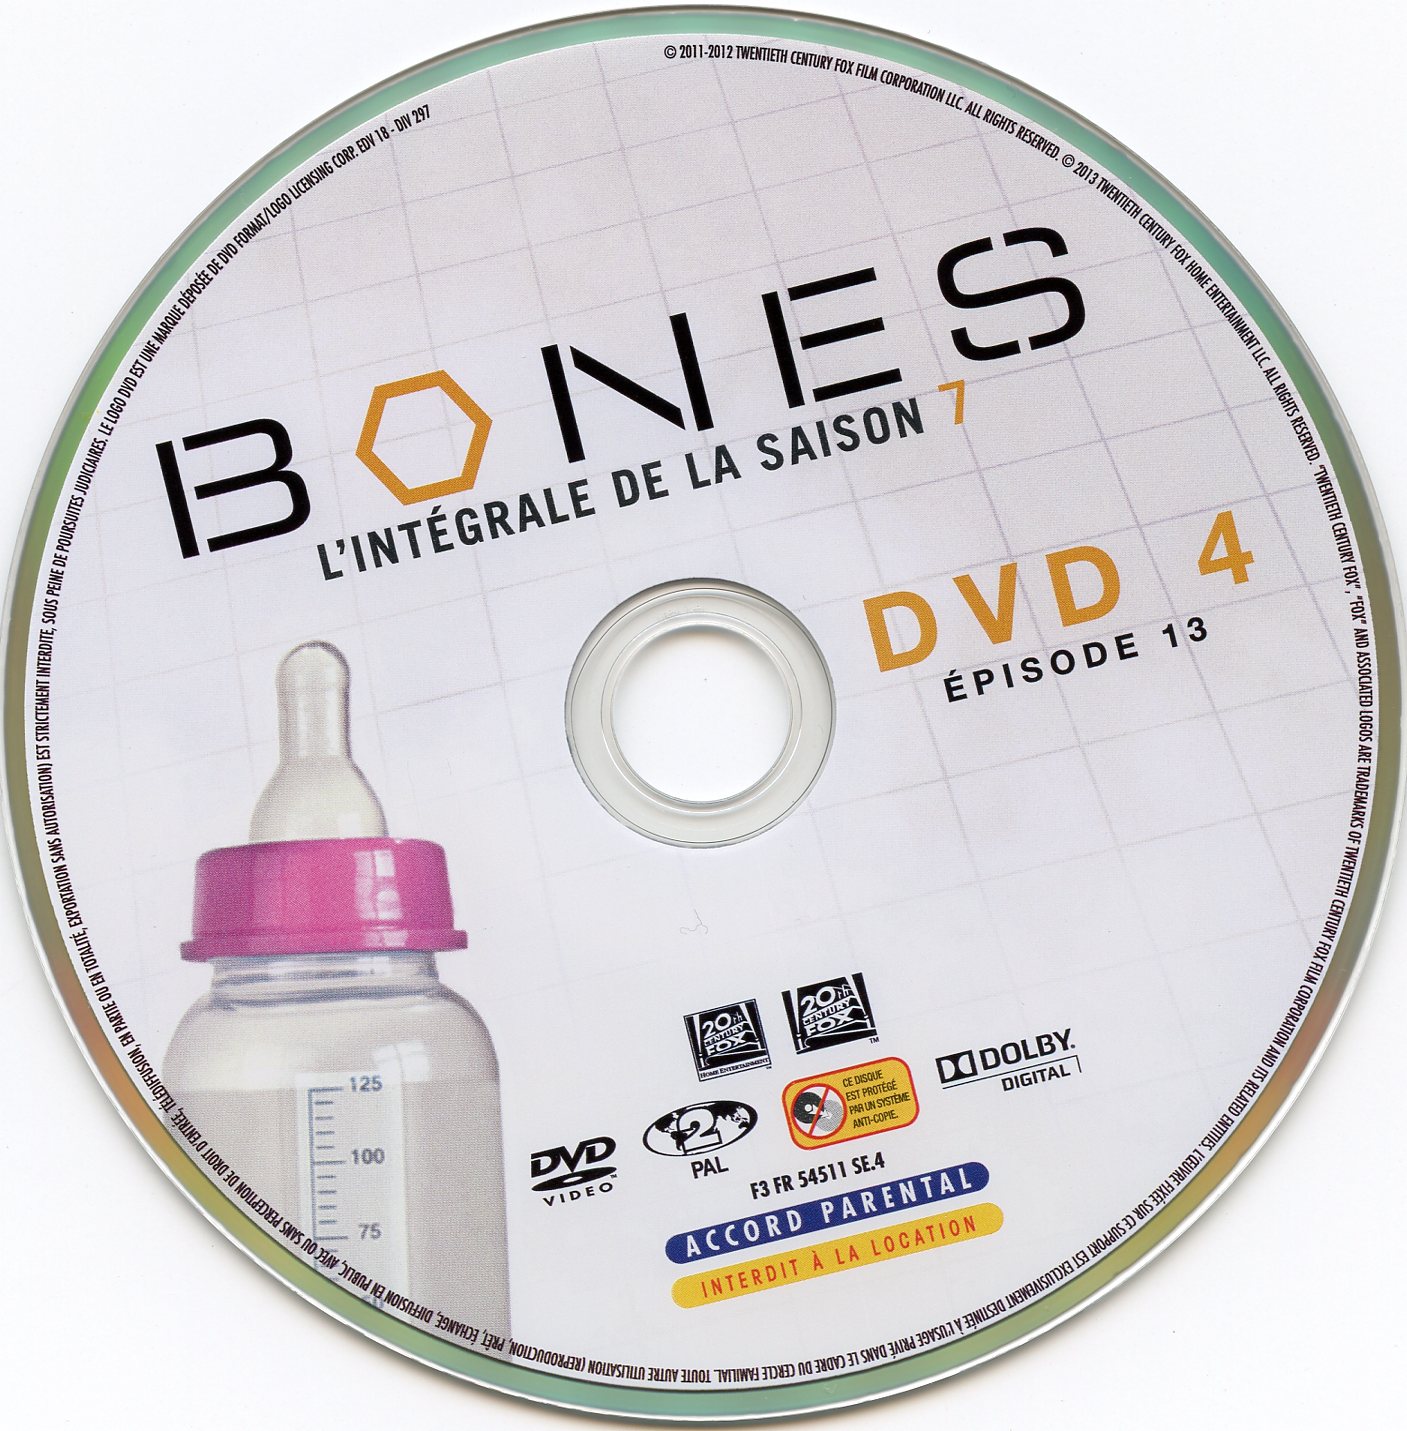 Bones Saison 7 DVD 4